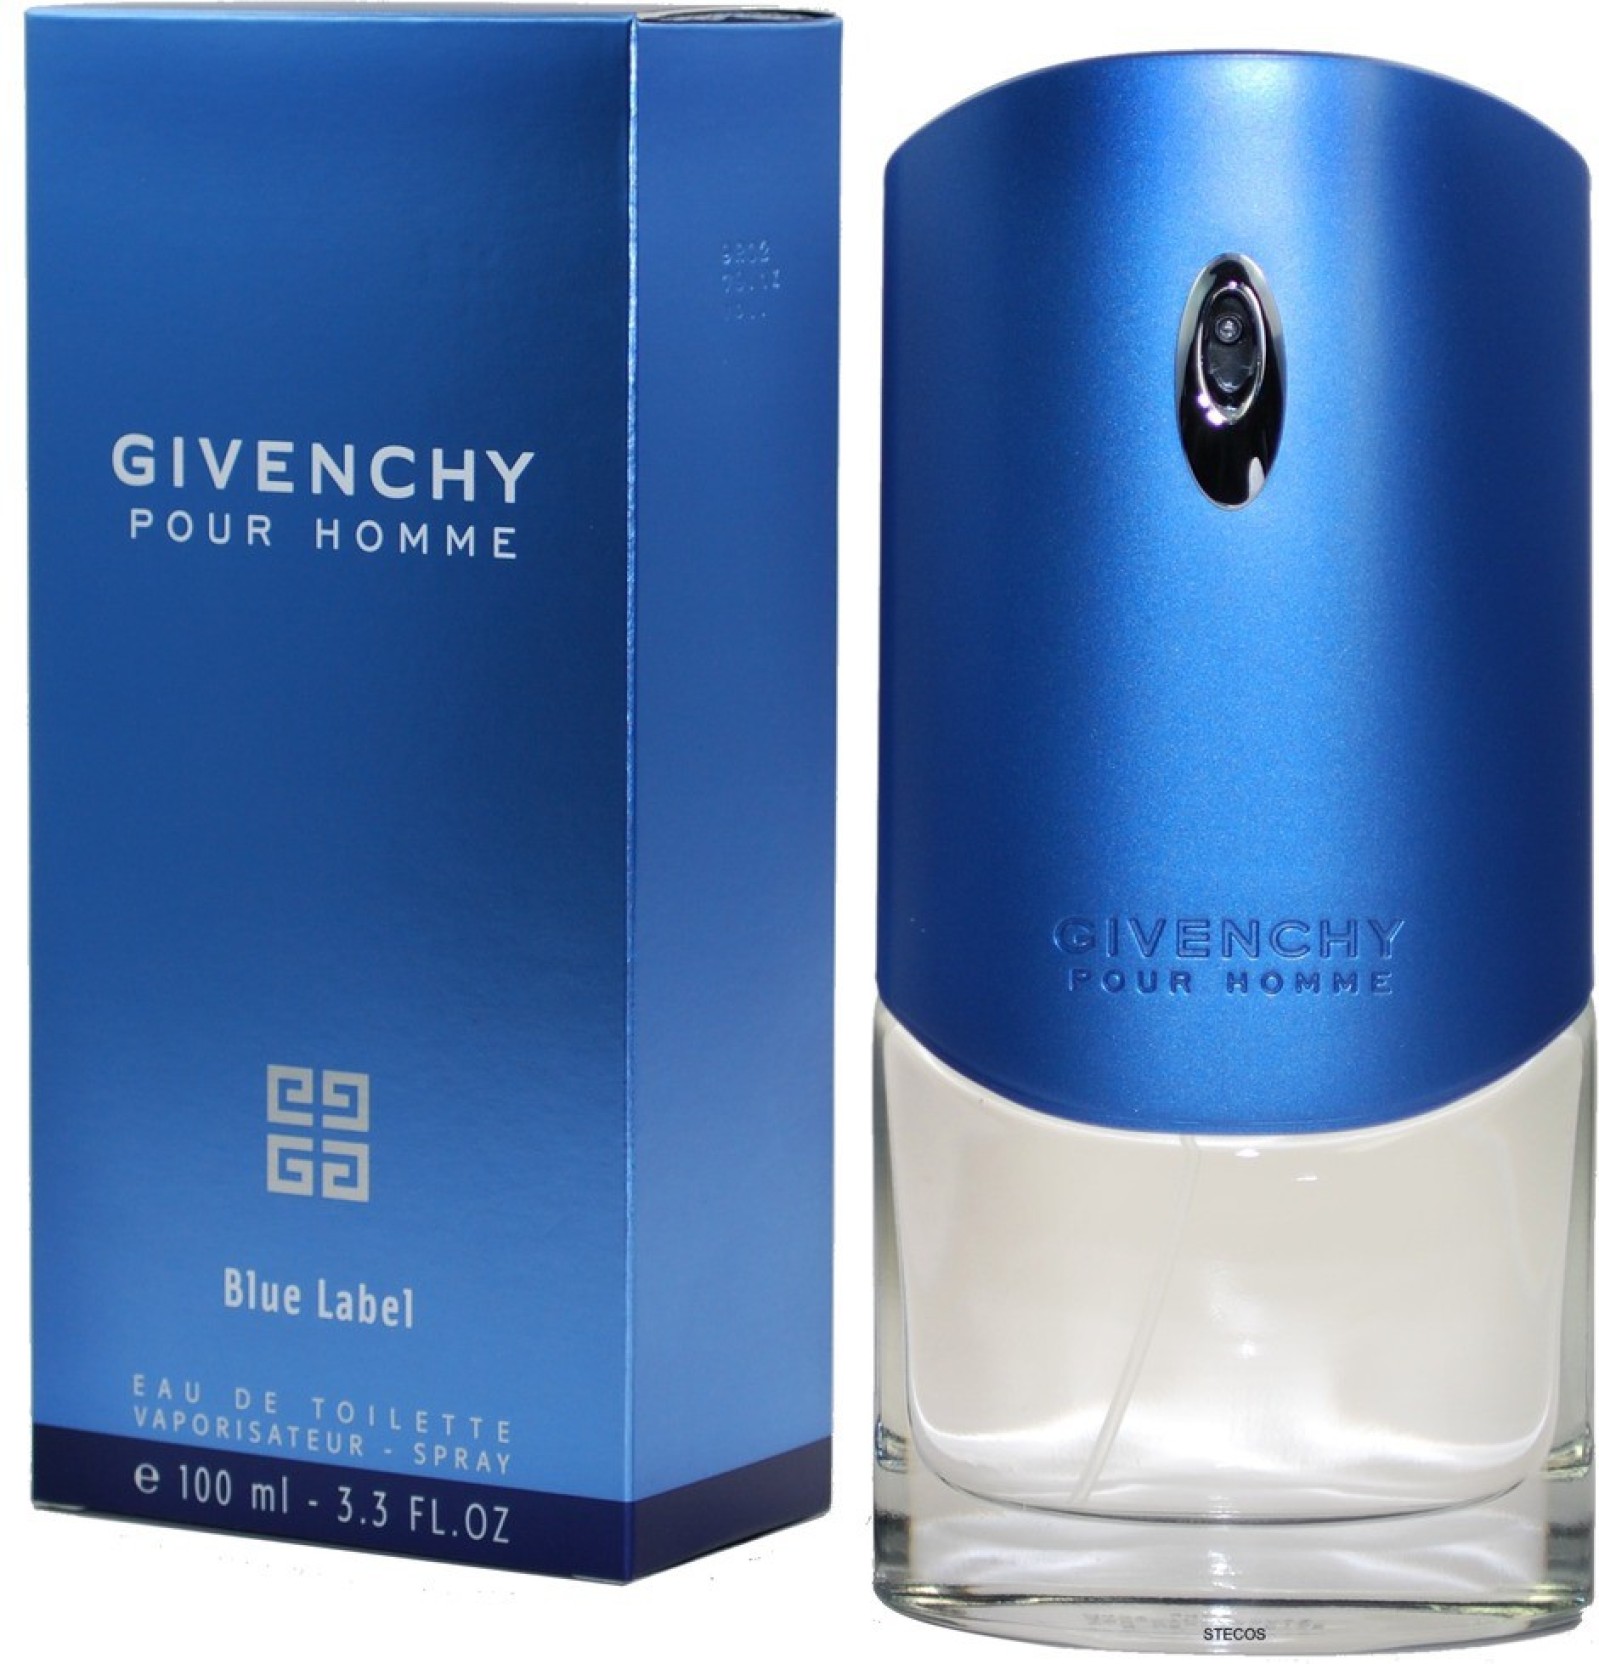 Живанши хом мужские. Givenchy pour homme Blue Label. Givenchy Blue Label 100ml. Givenchy pour homme Blue Label Givenchy. Givenchy pour homme Blue Label EDT, 100 ml.